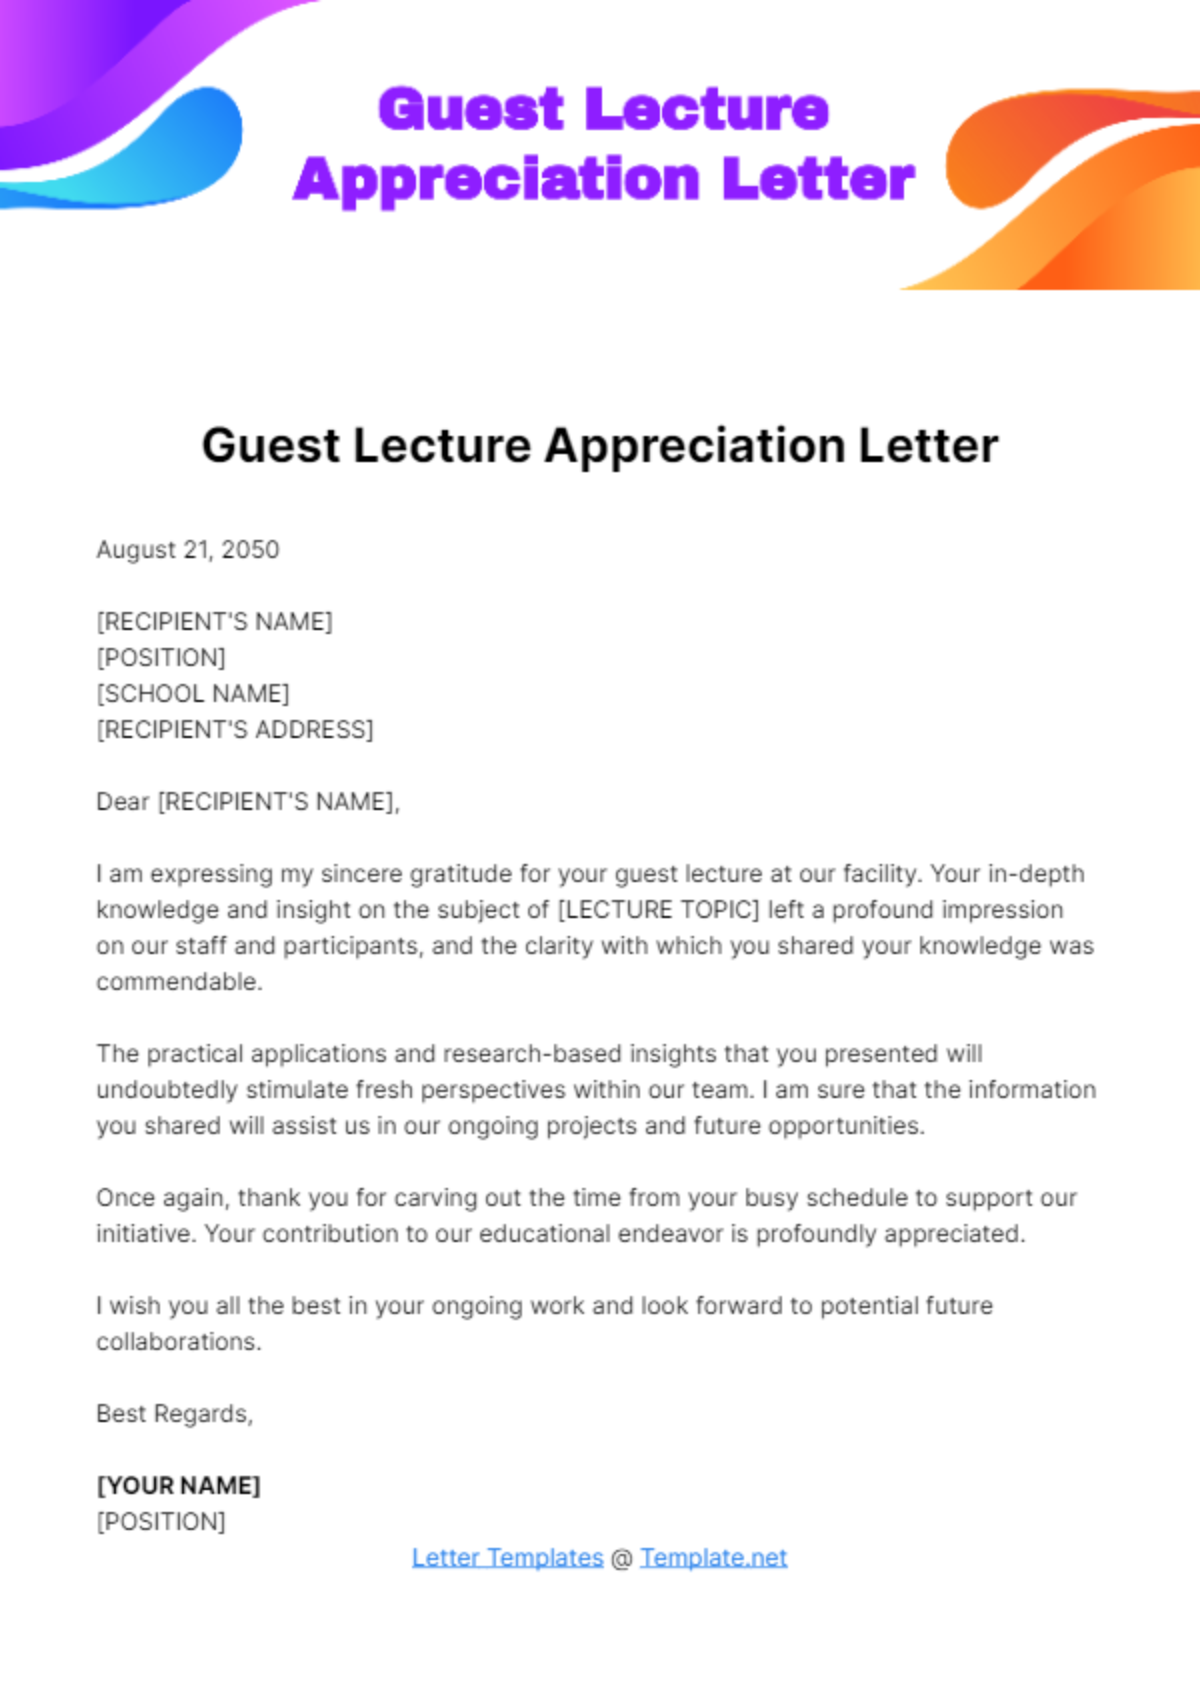 Free Guest Lecture Appreciation Letter Template